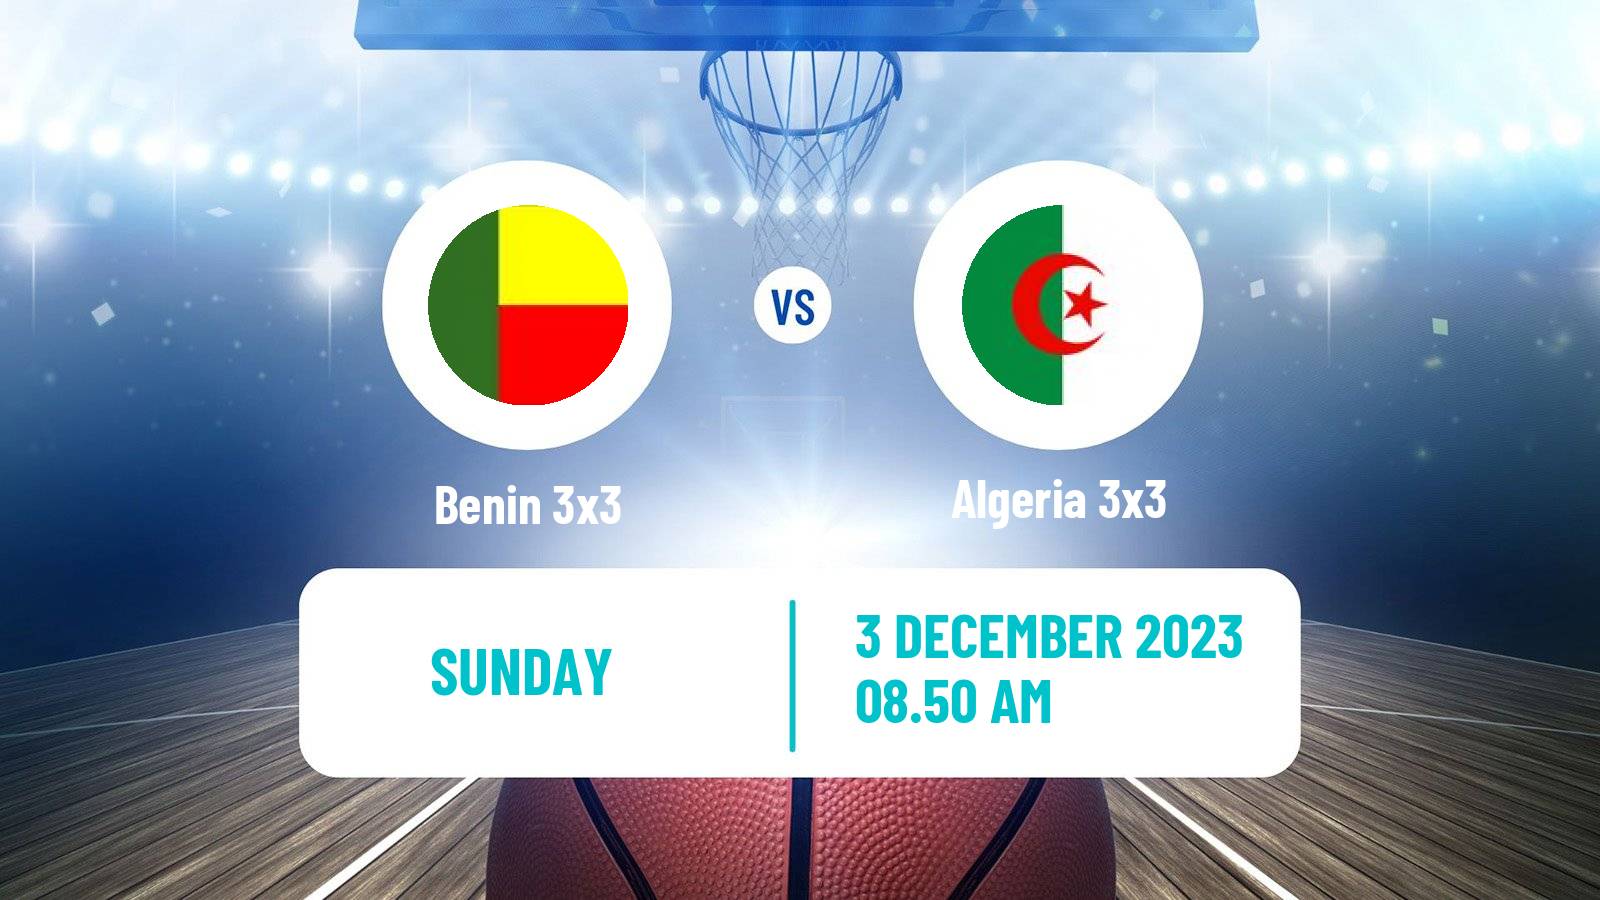 Basketball Africa Cup 3x3 Benin 3x3 - Algeria 3x3